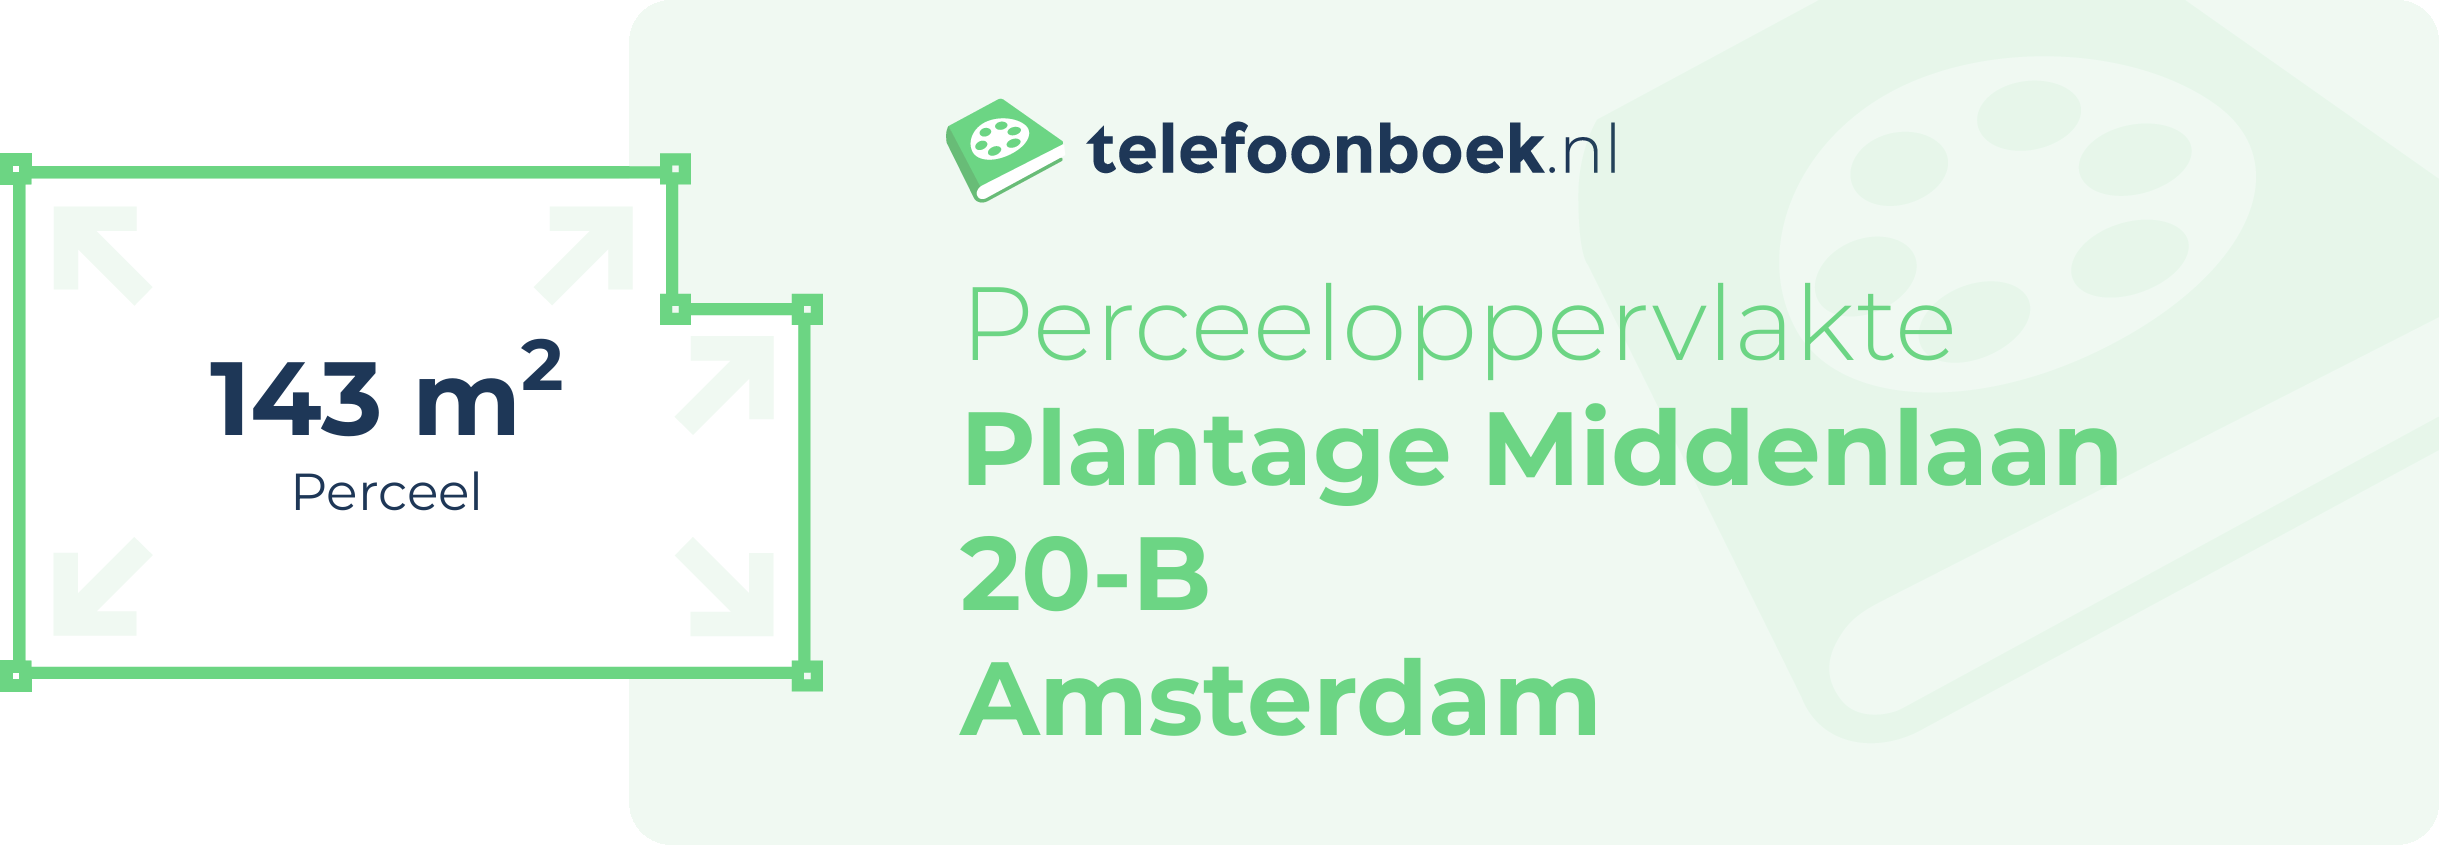 Perceeloppervlakte Plantage Middenlaan 20-B Amsterdam